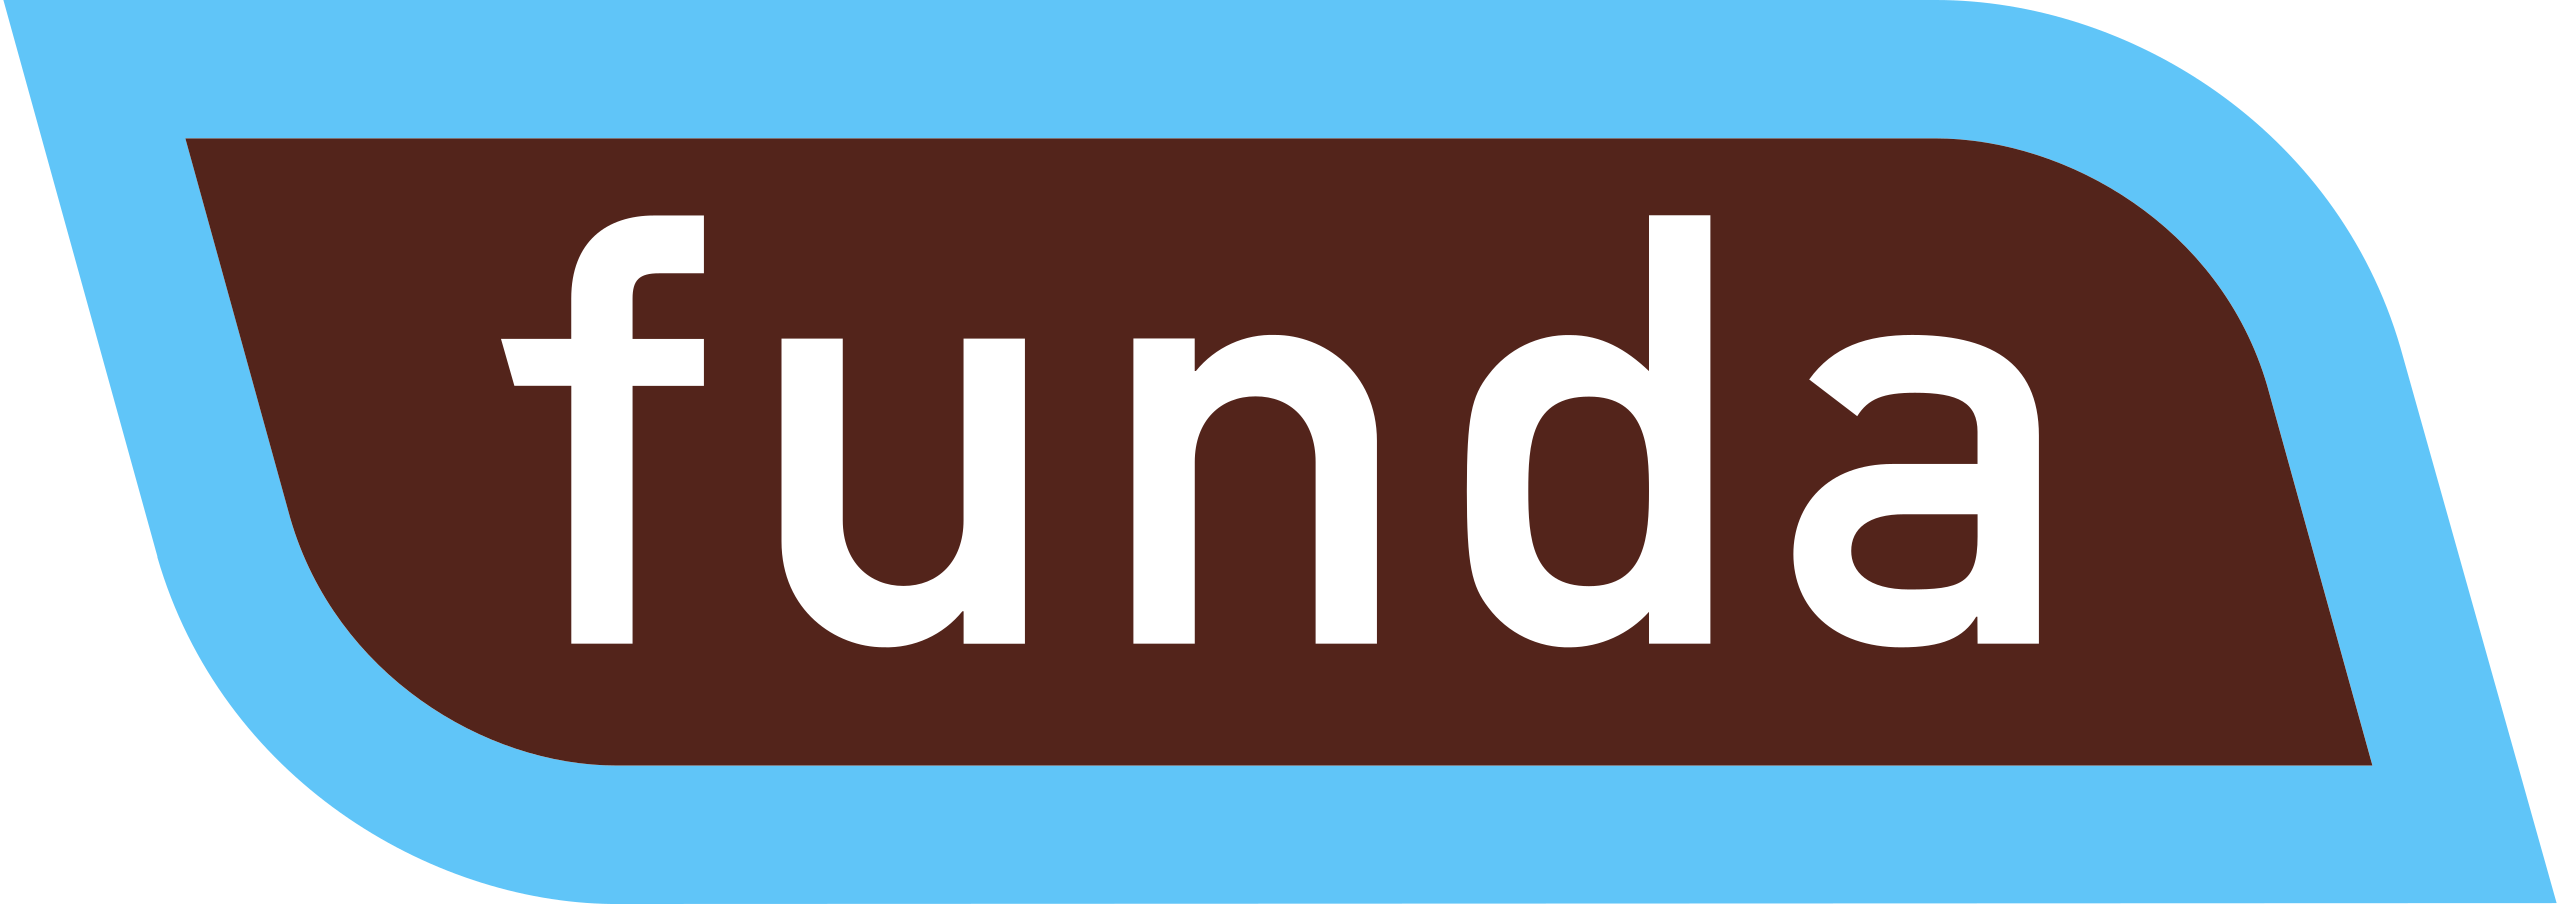 Funda_logo.svg